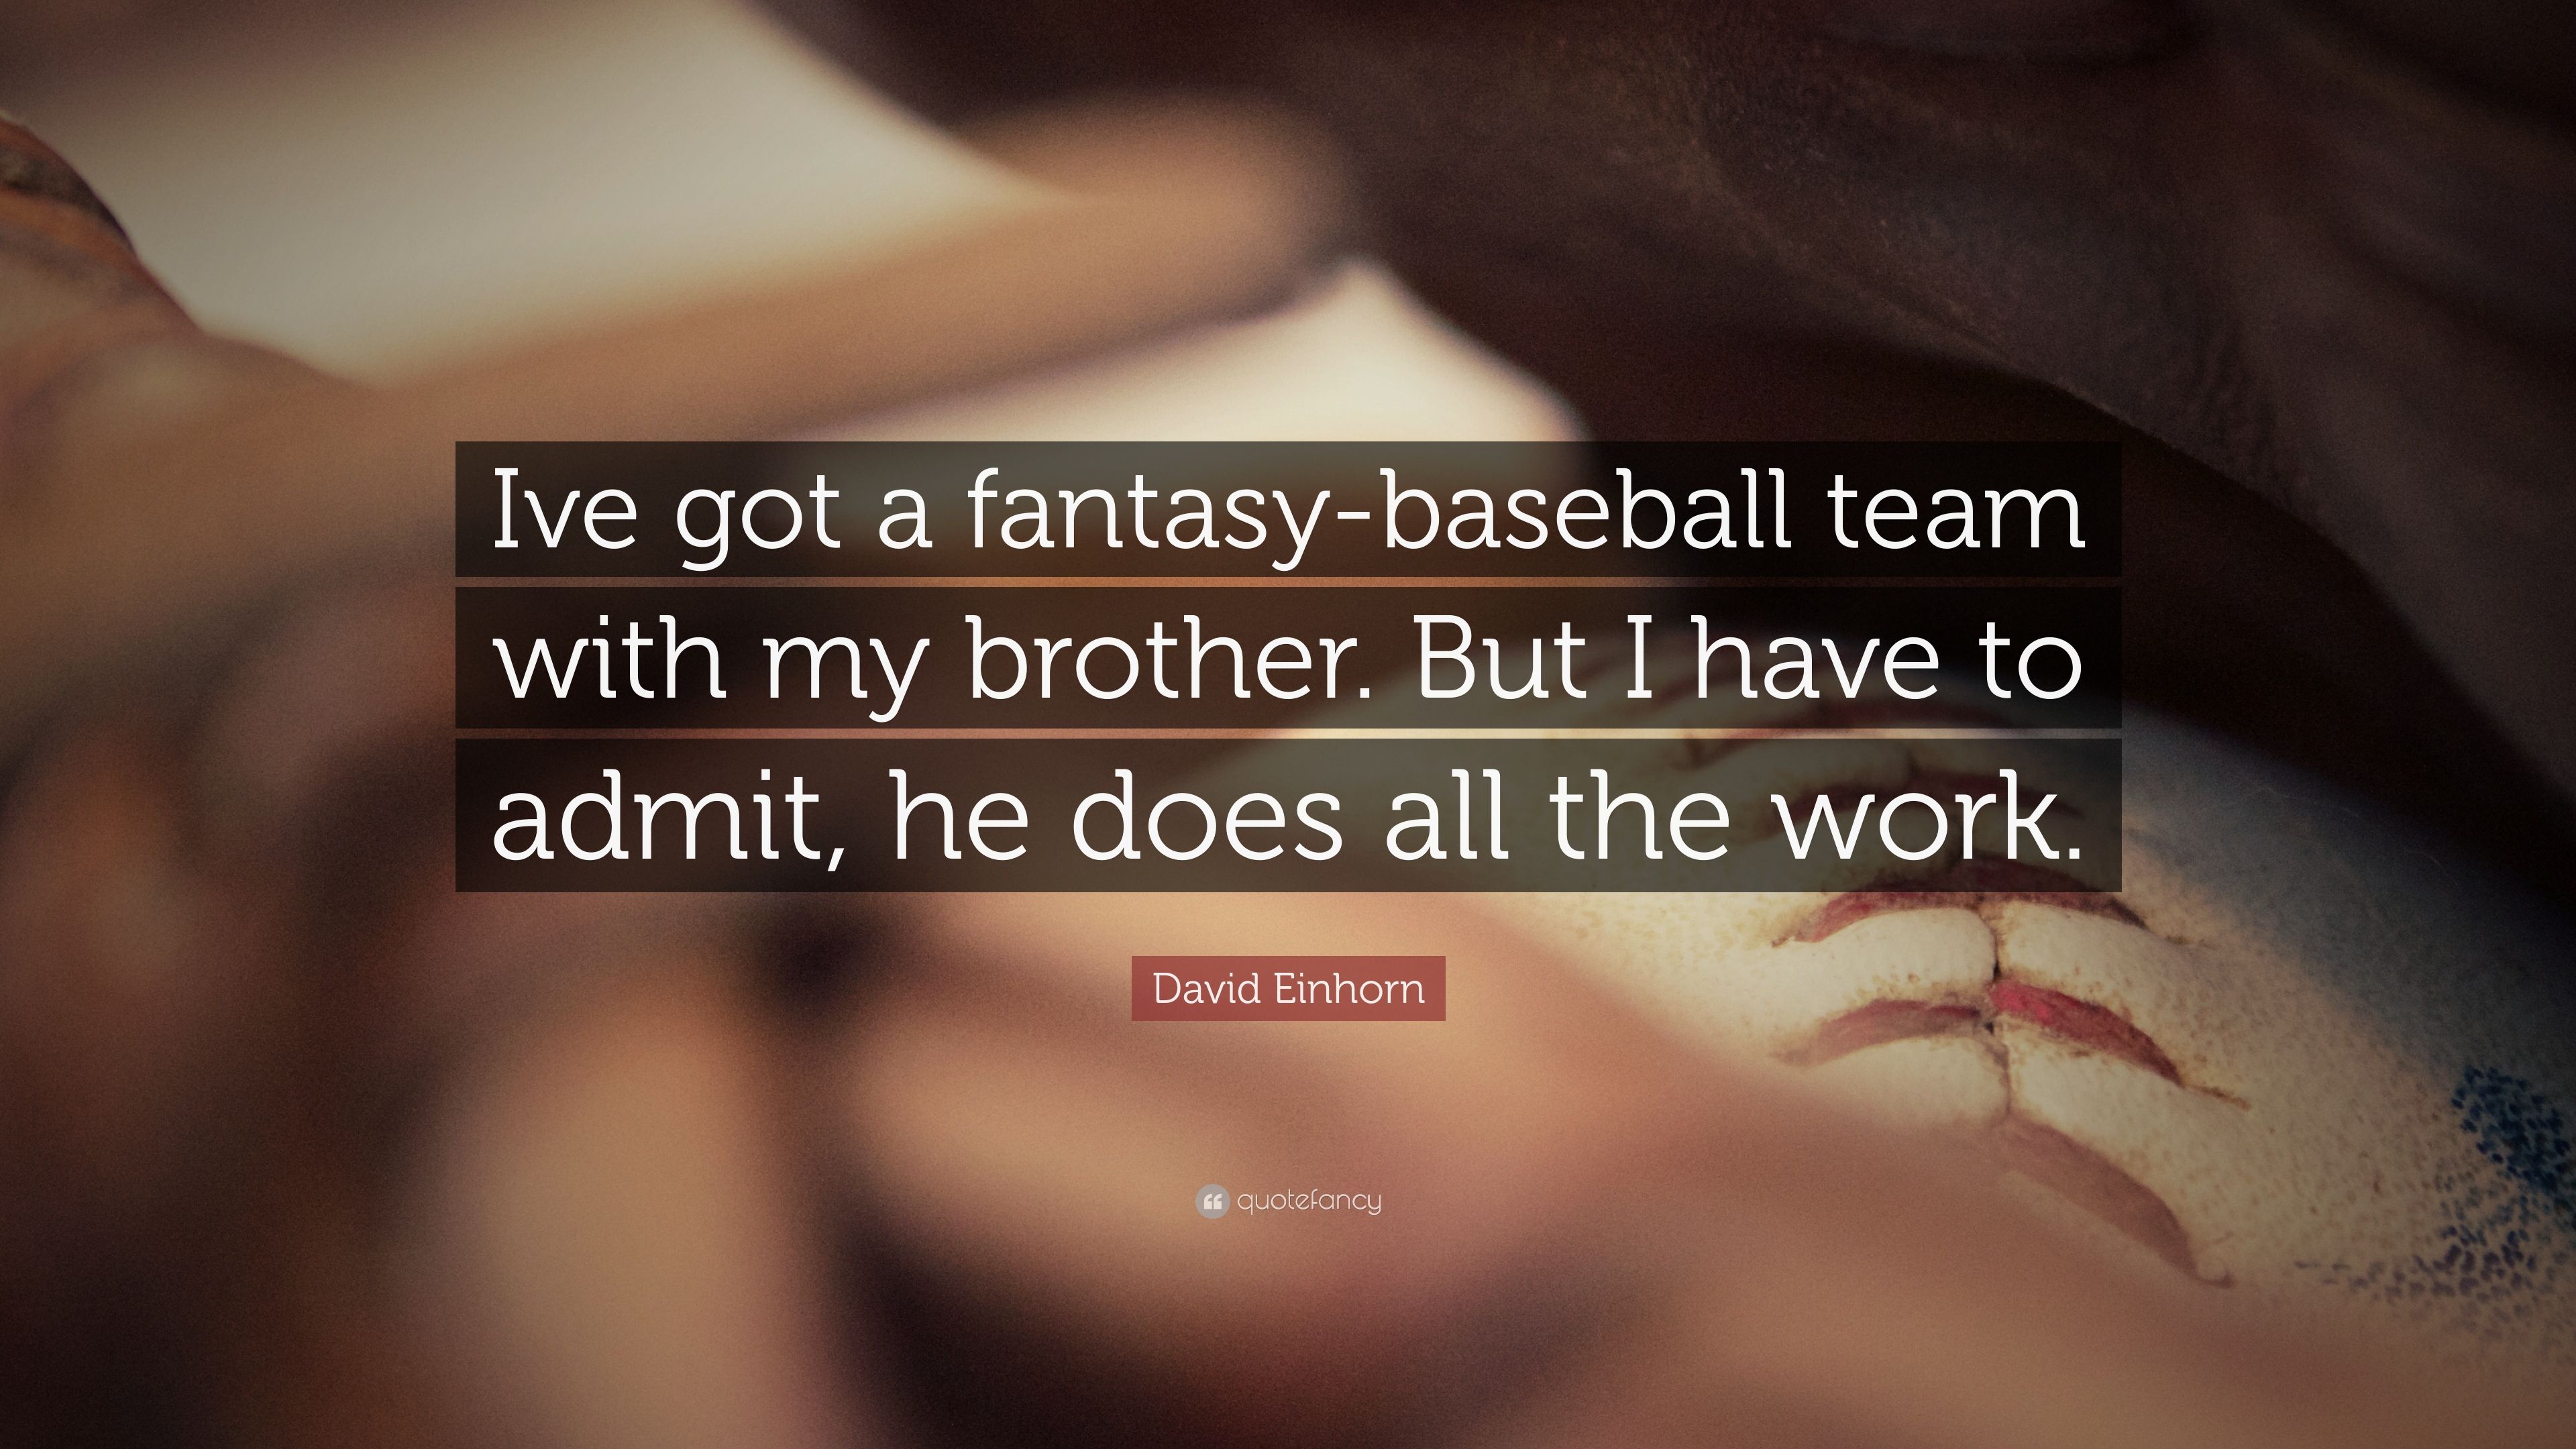 David Einhorn Quote: “Ive Got A Fantasy Baseball Team With My